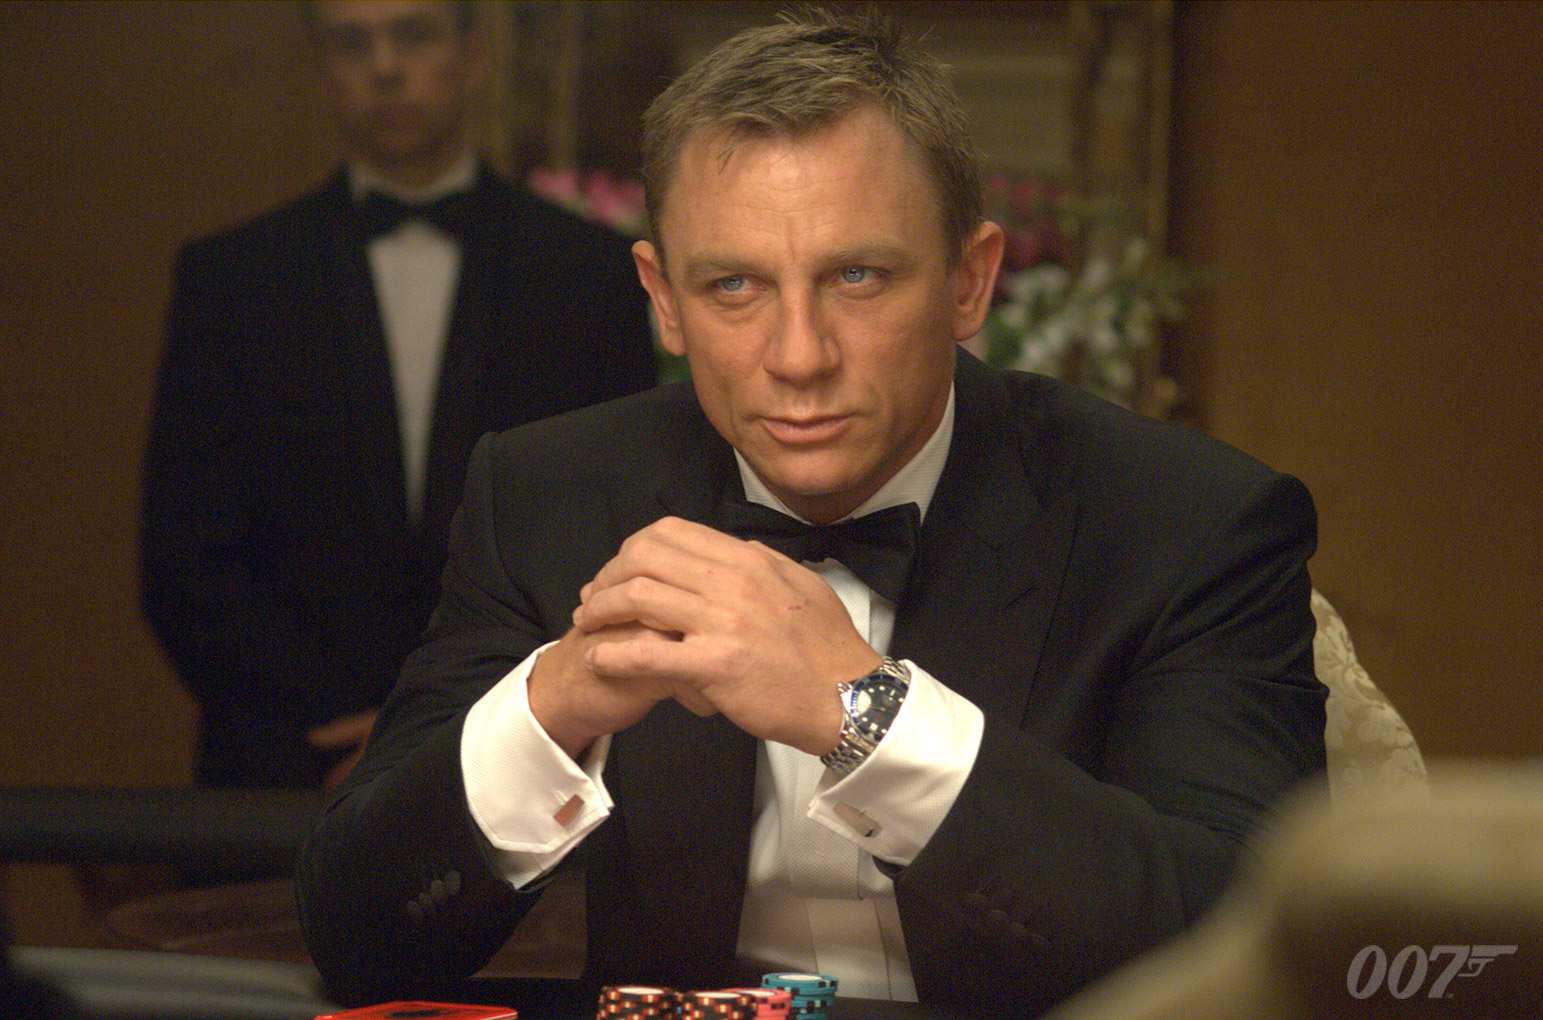 007 casino royale putlockers